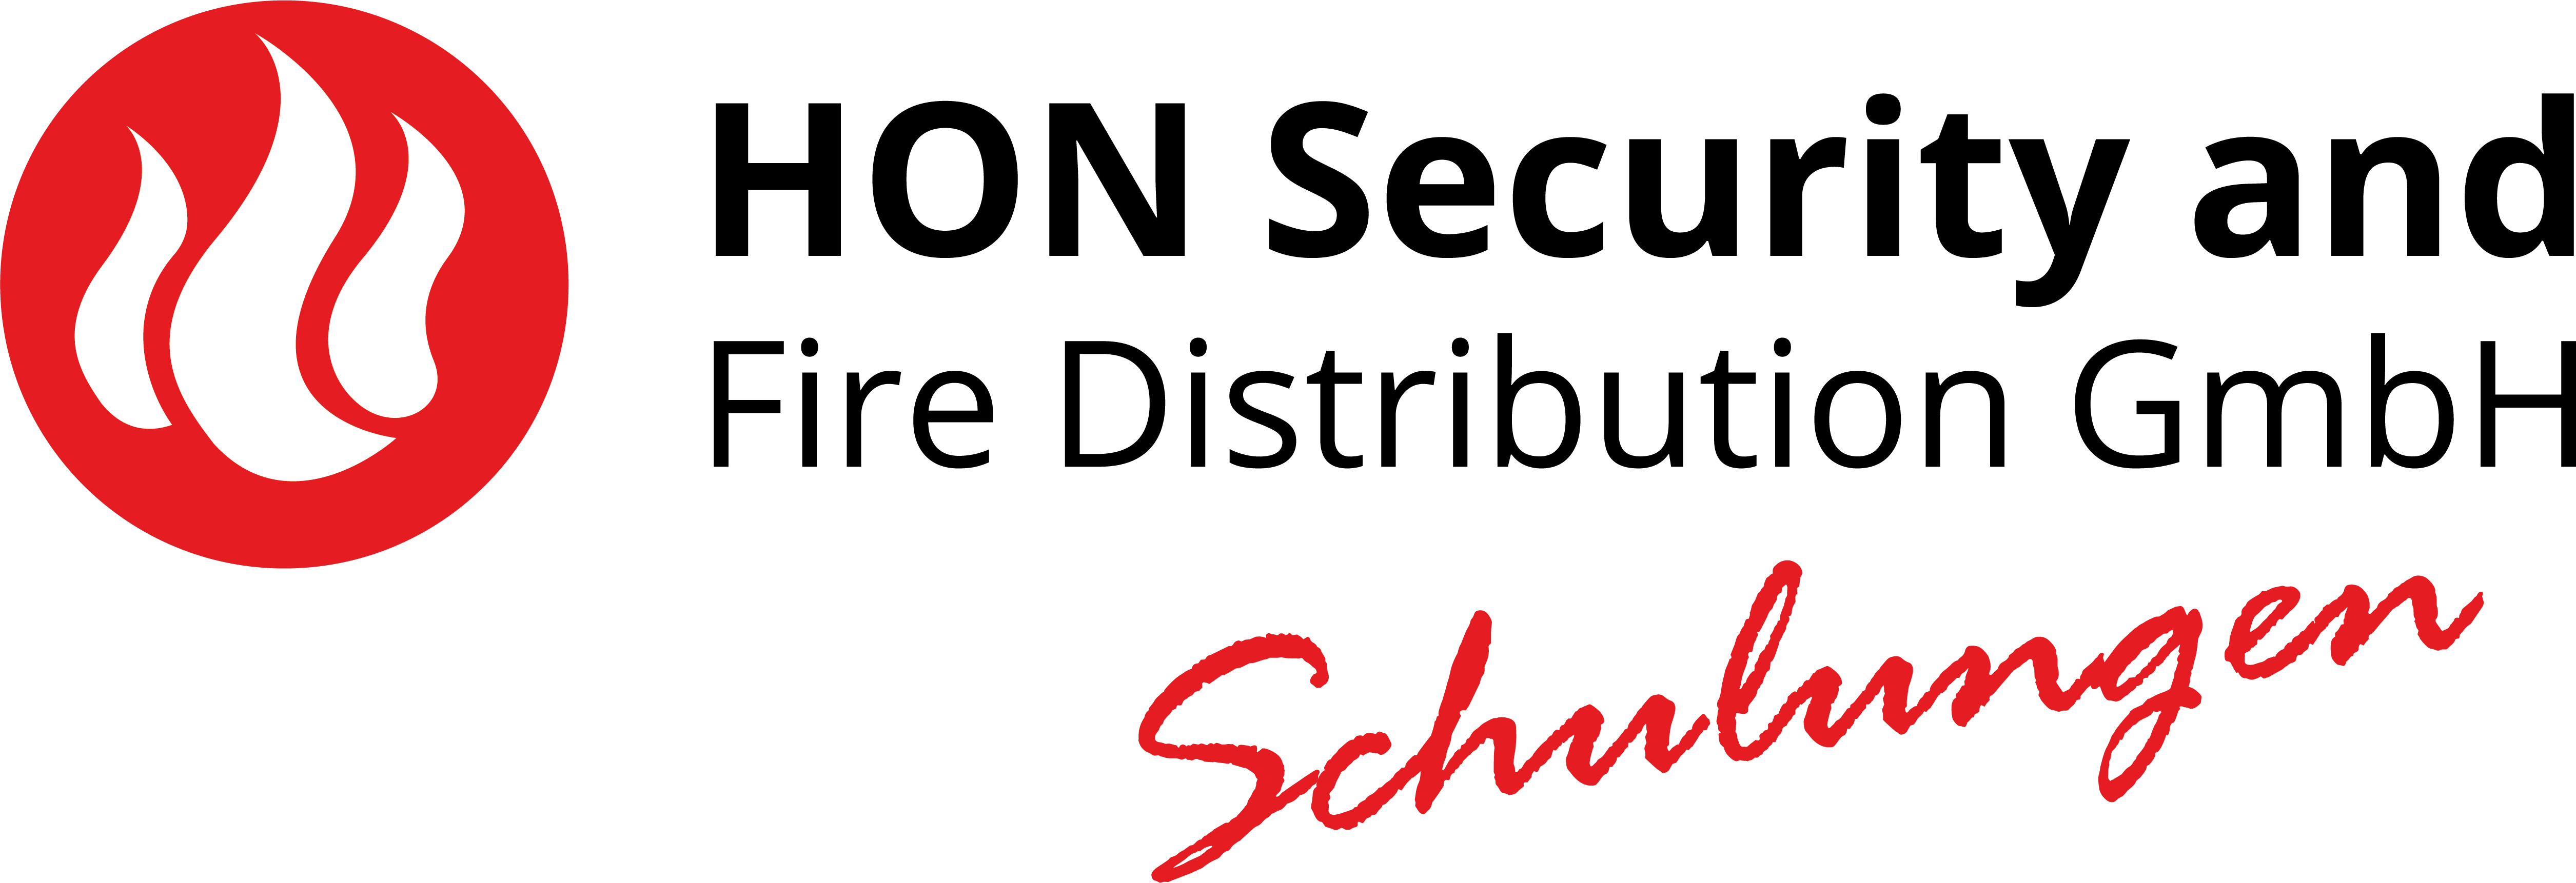 HON Fire Security Distribution GmbH Schulungen